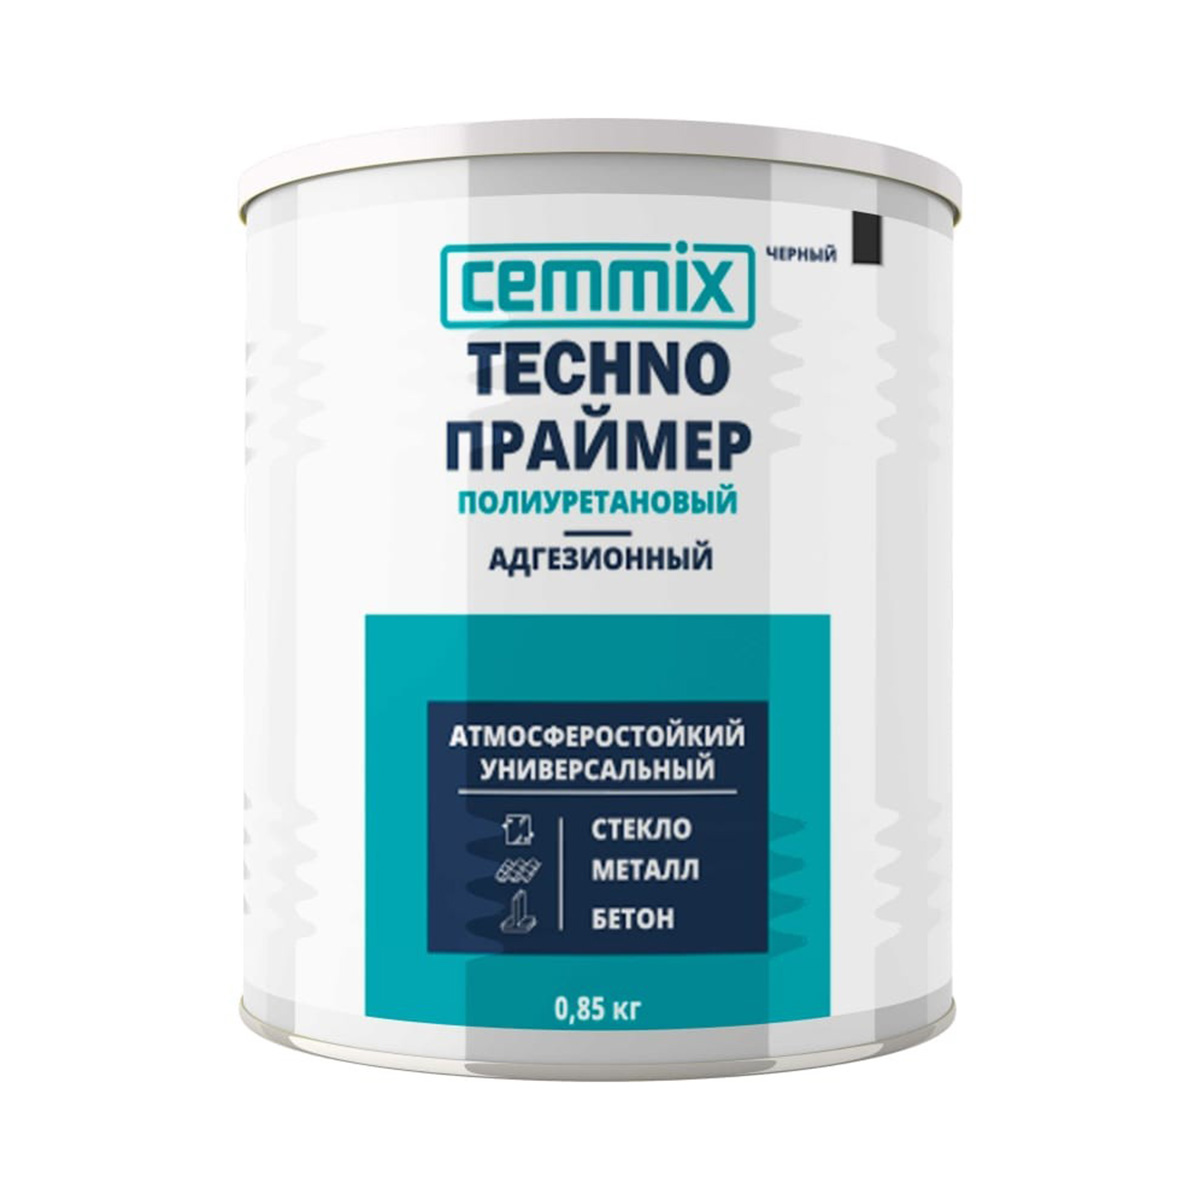 Праймер полиуретановый для швов "techno" 0,85 кг (1) "cemmix"